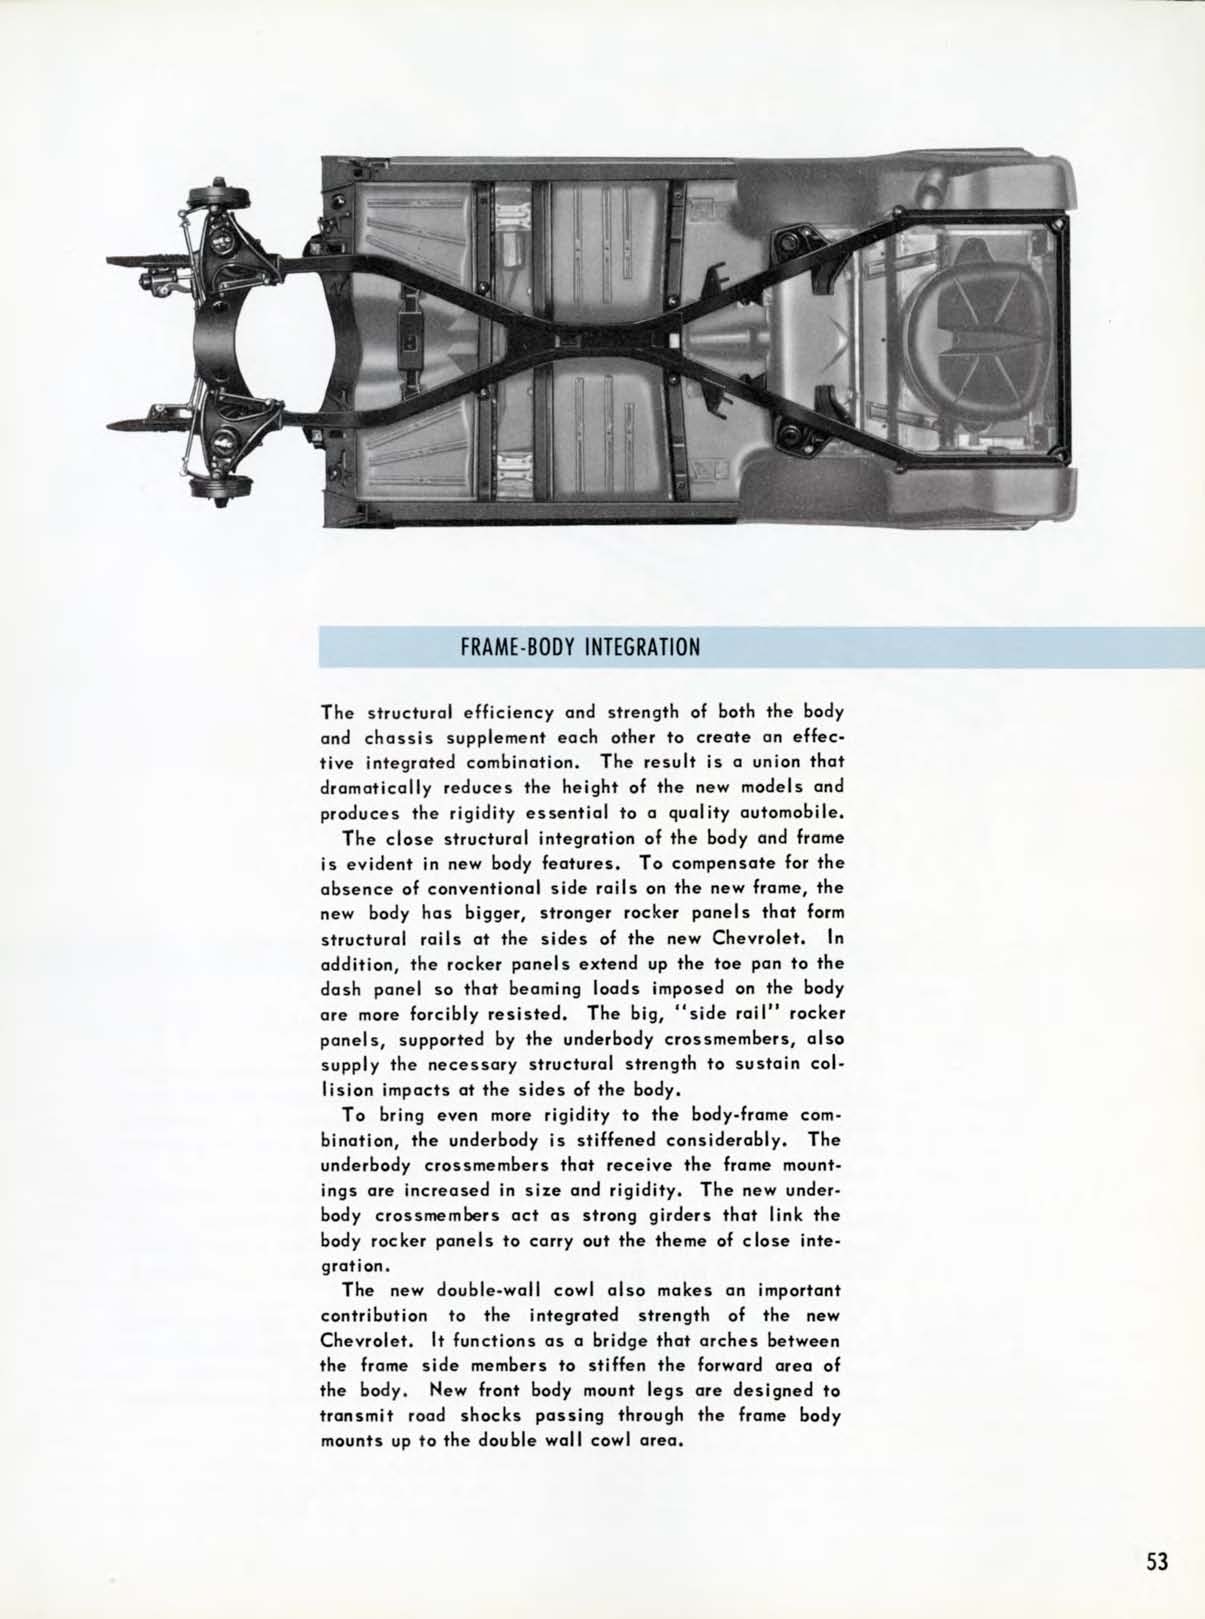 1958_Chevrolet_Engineering_Features-053